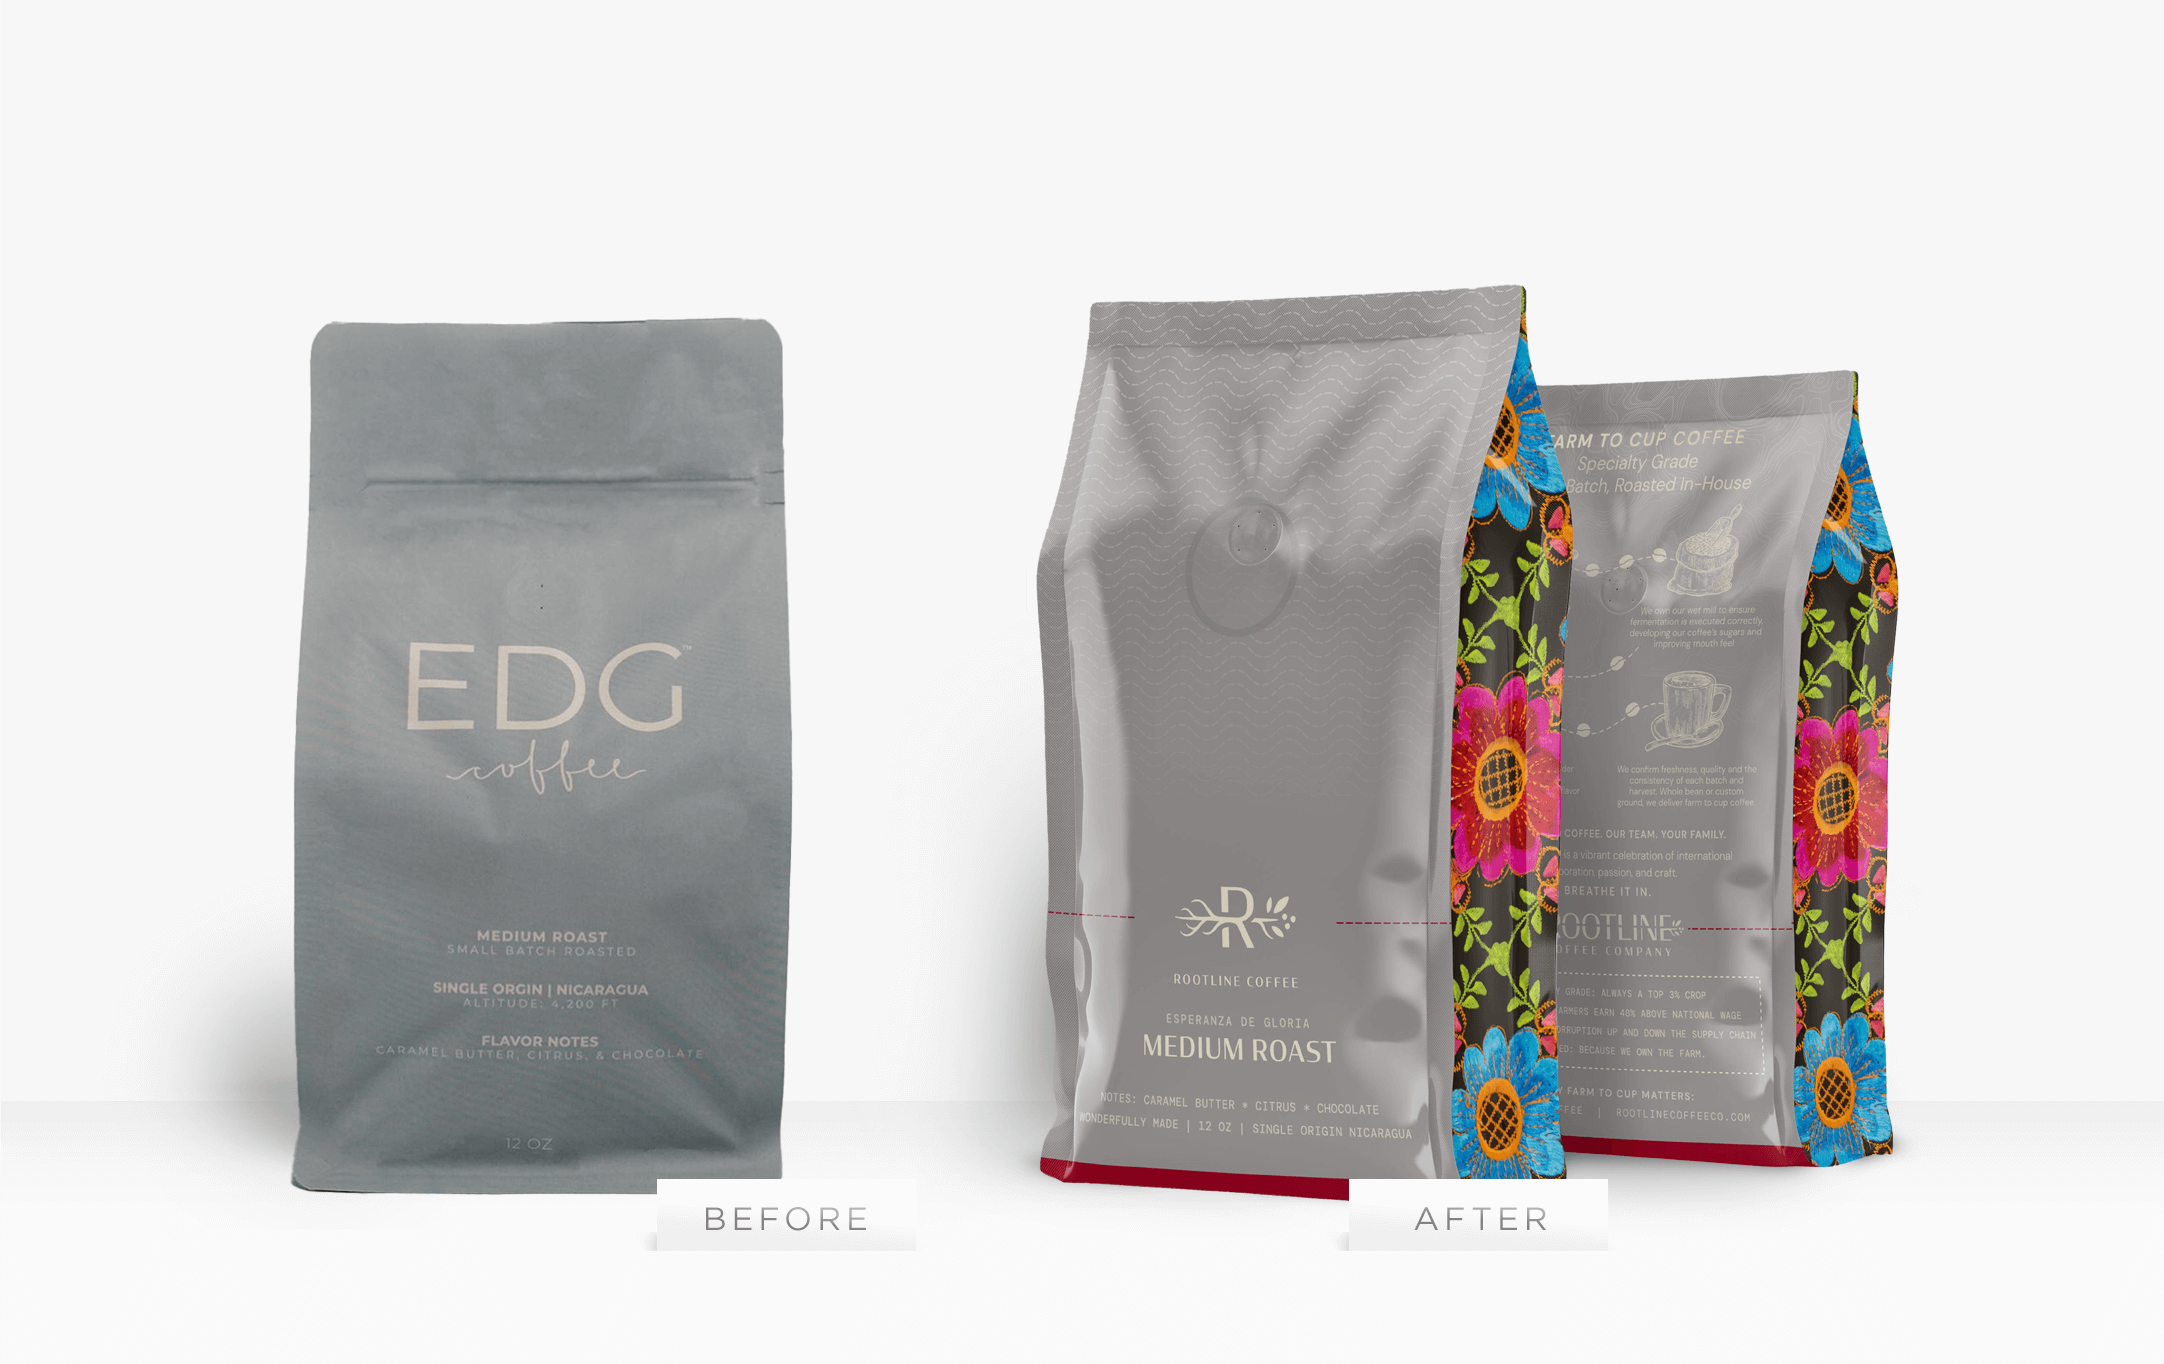 Rootline Medium Roast Coffee Bag Design - Before and After